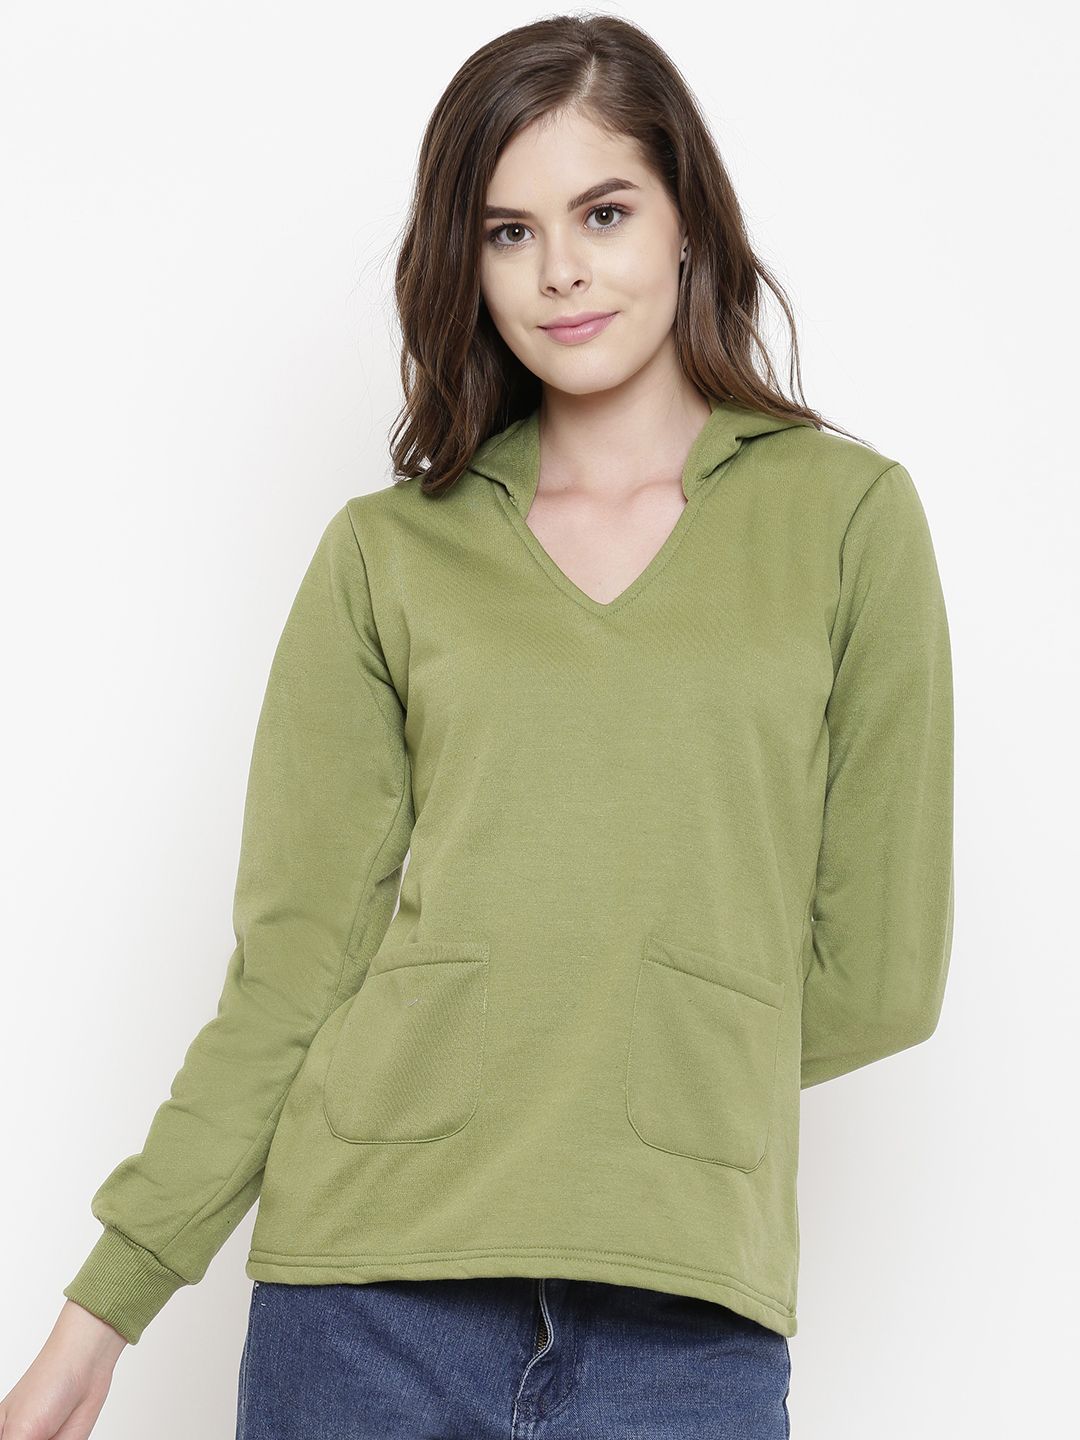 Belle Fille Women Green Solid Hooded Sweatshirt Price in India